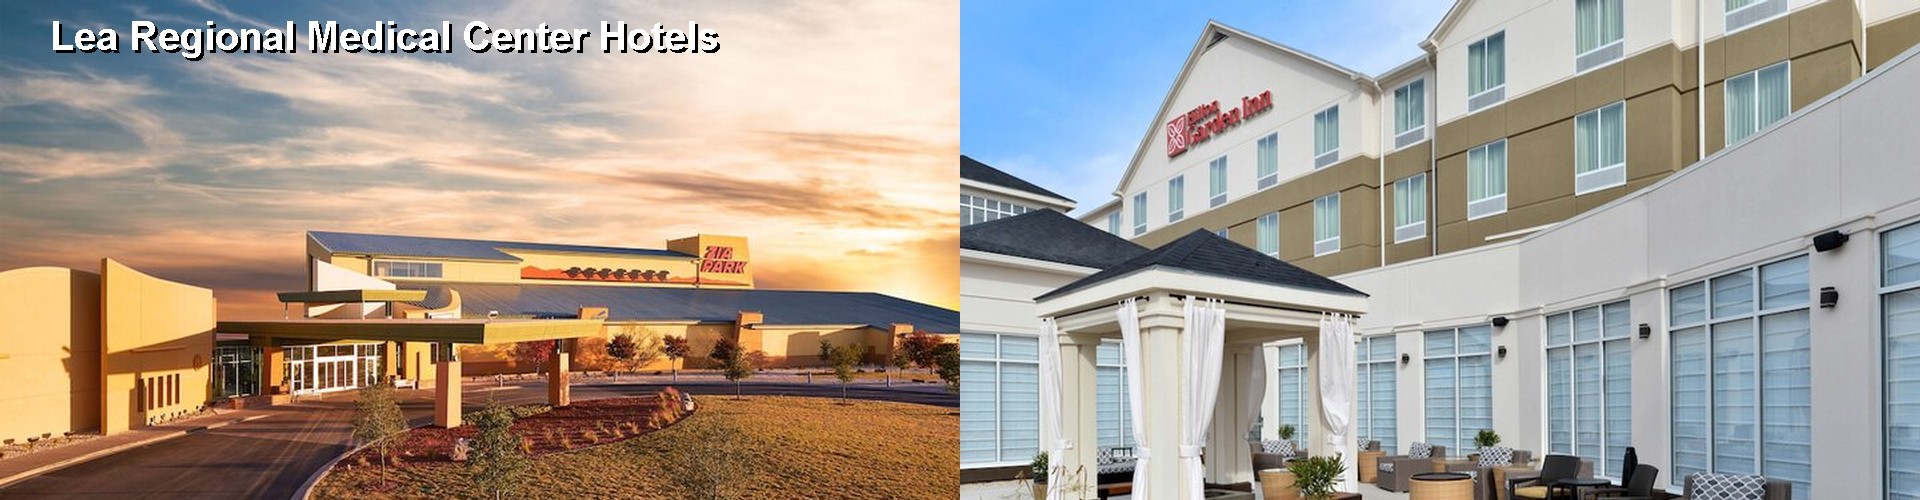 5 Best Hotels near Lea Regional Medical Center